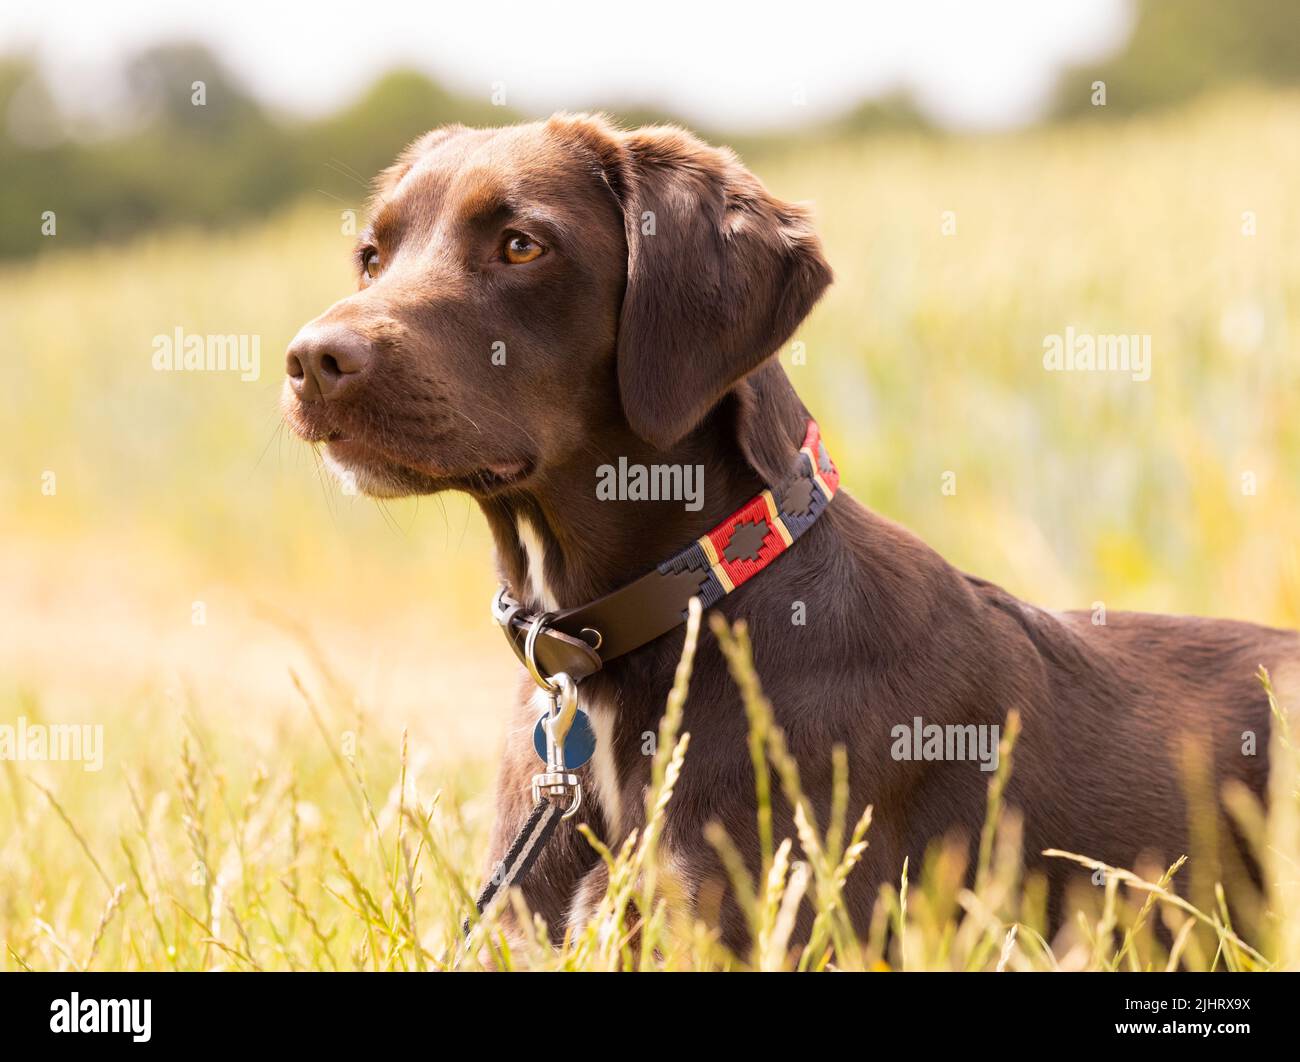 Chocolate Labrador Springer Spaniel mixed breed dog called a Springador lying in a field of grass. Stock Photo